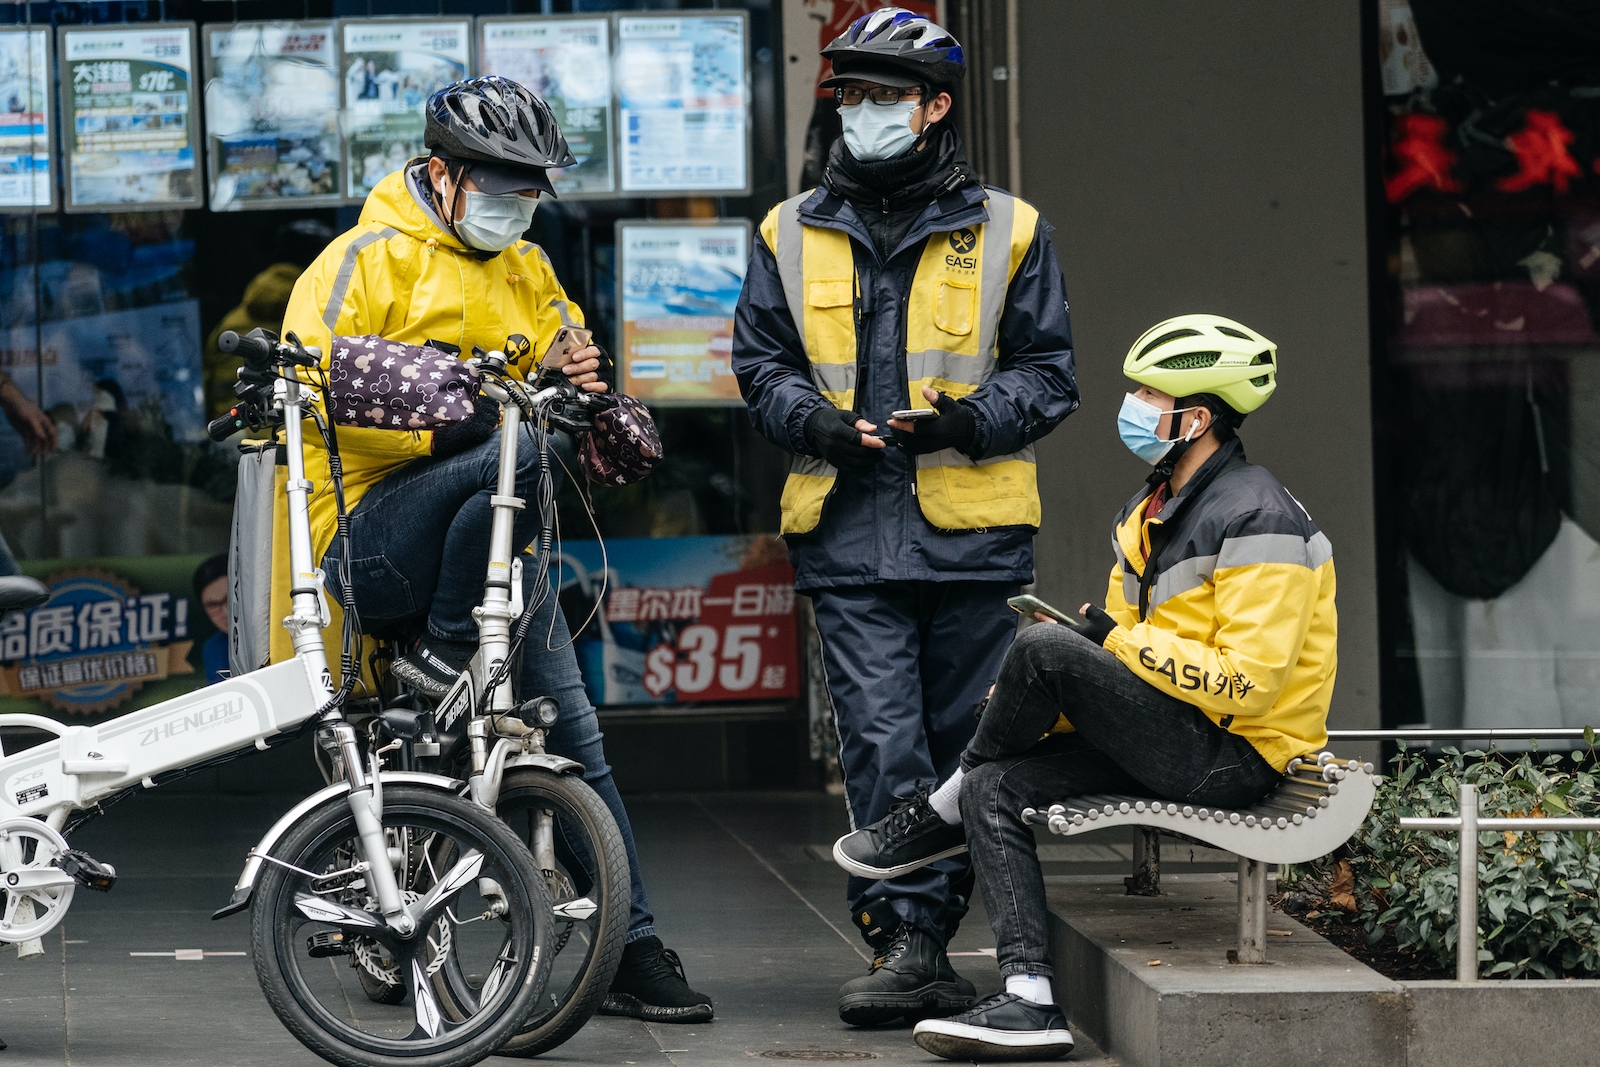 Food delivery bikers in Melbourne, Australia